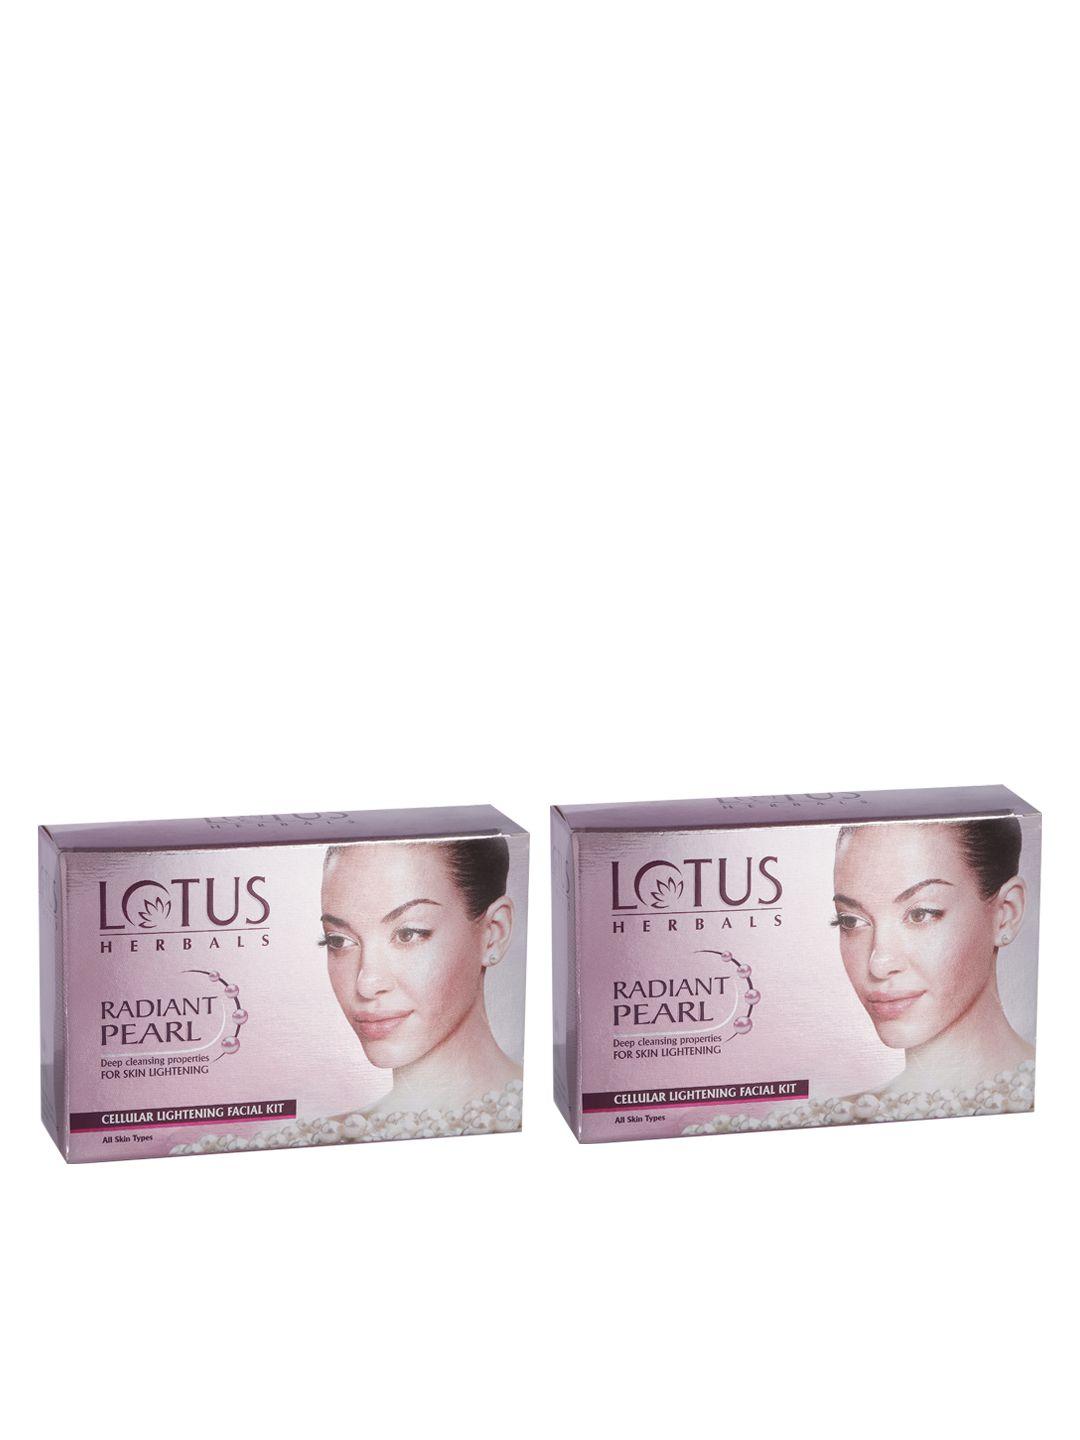 lotus herbals set of 2 radiant pearl cellular lightening facial kit